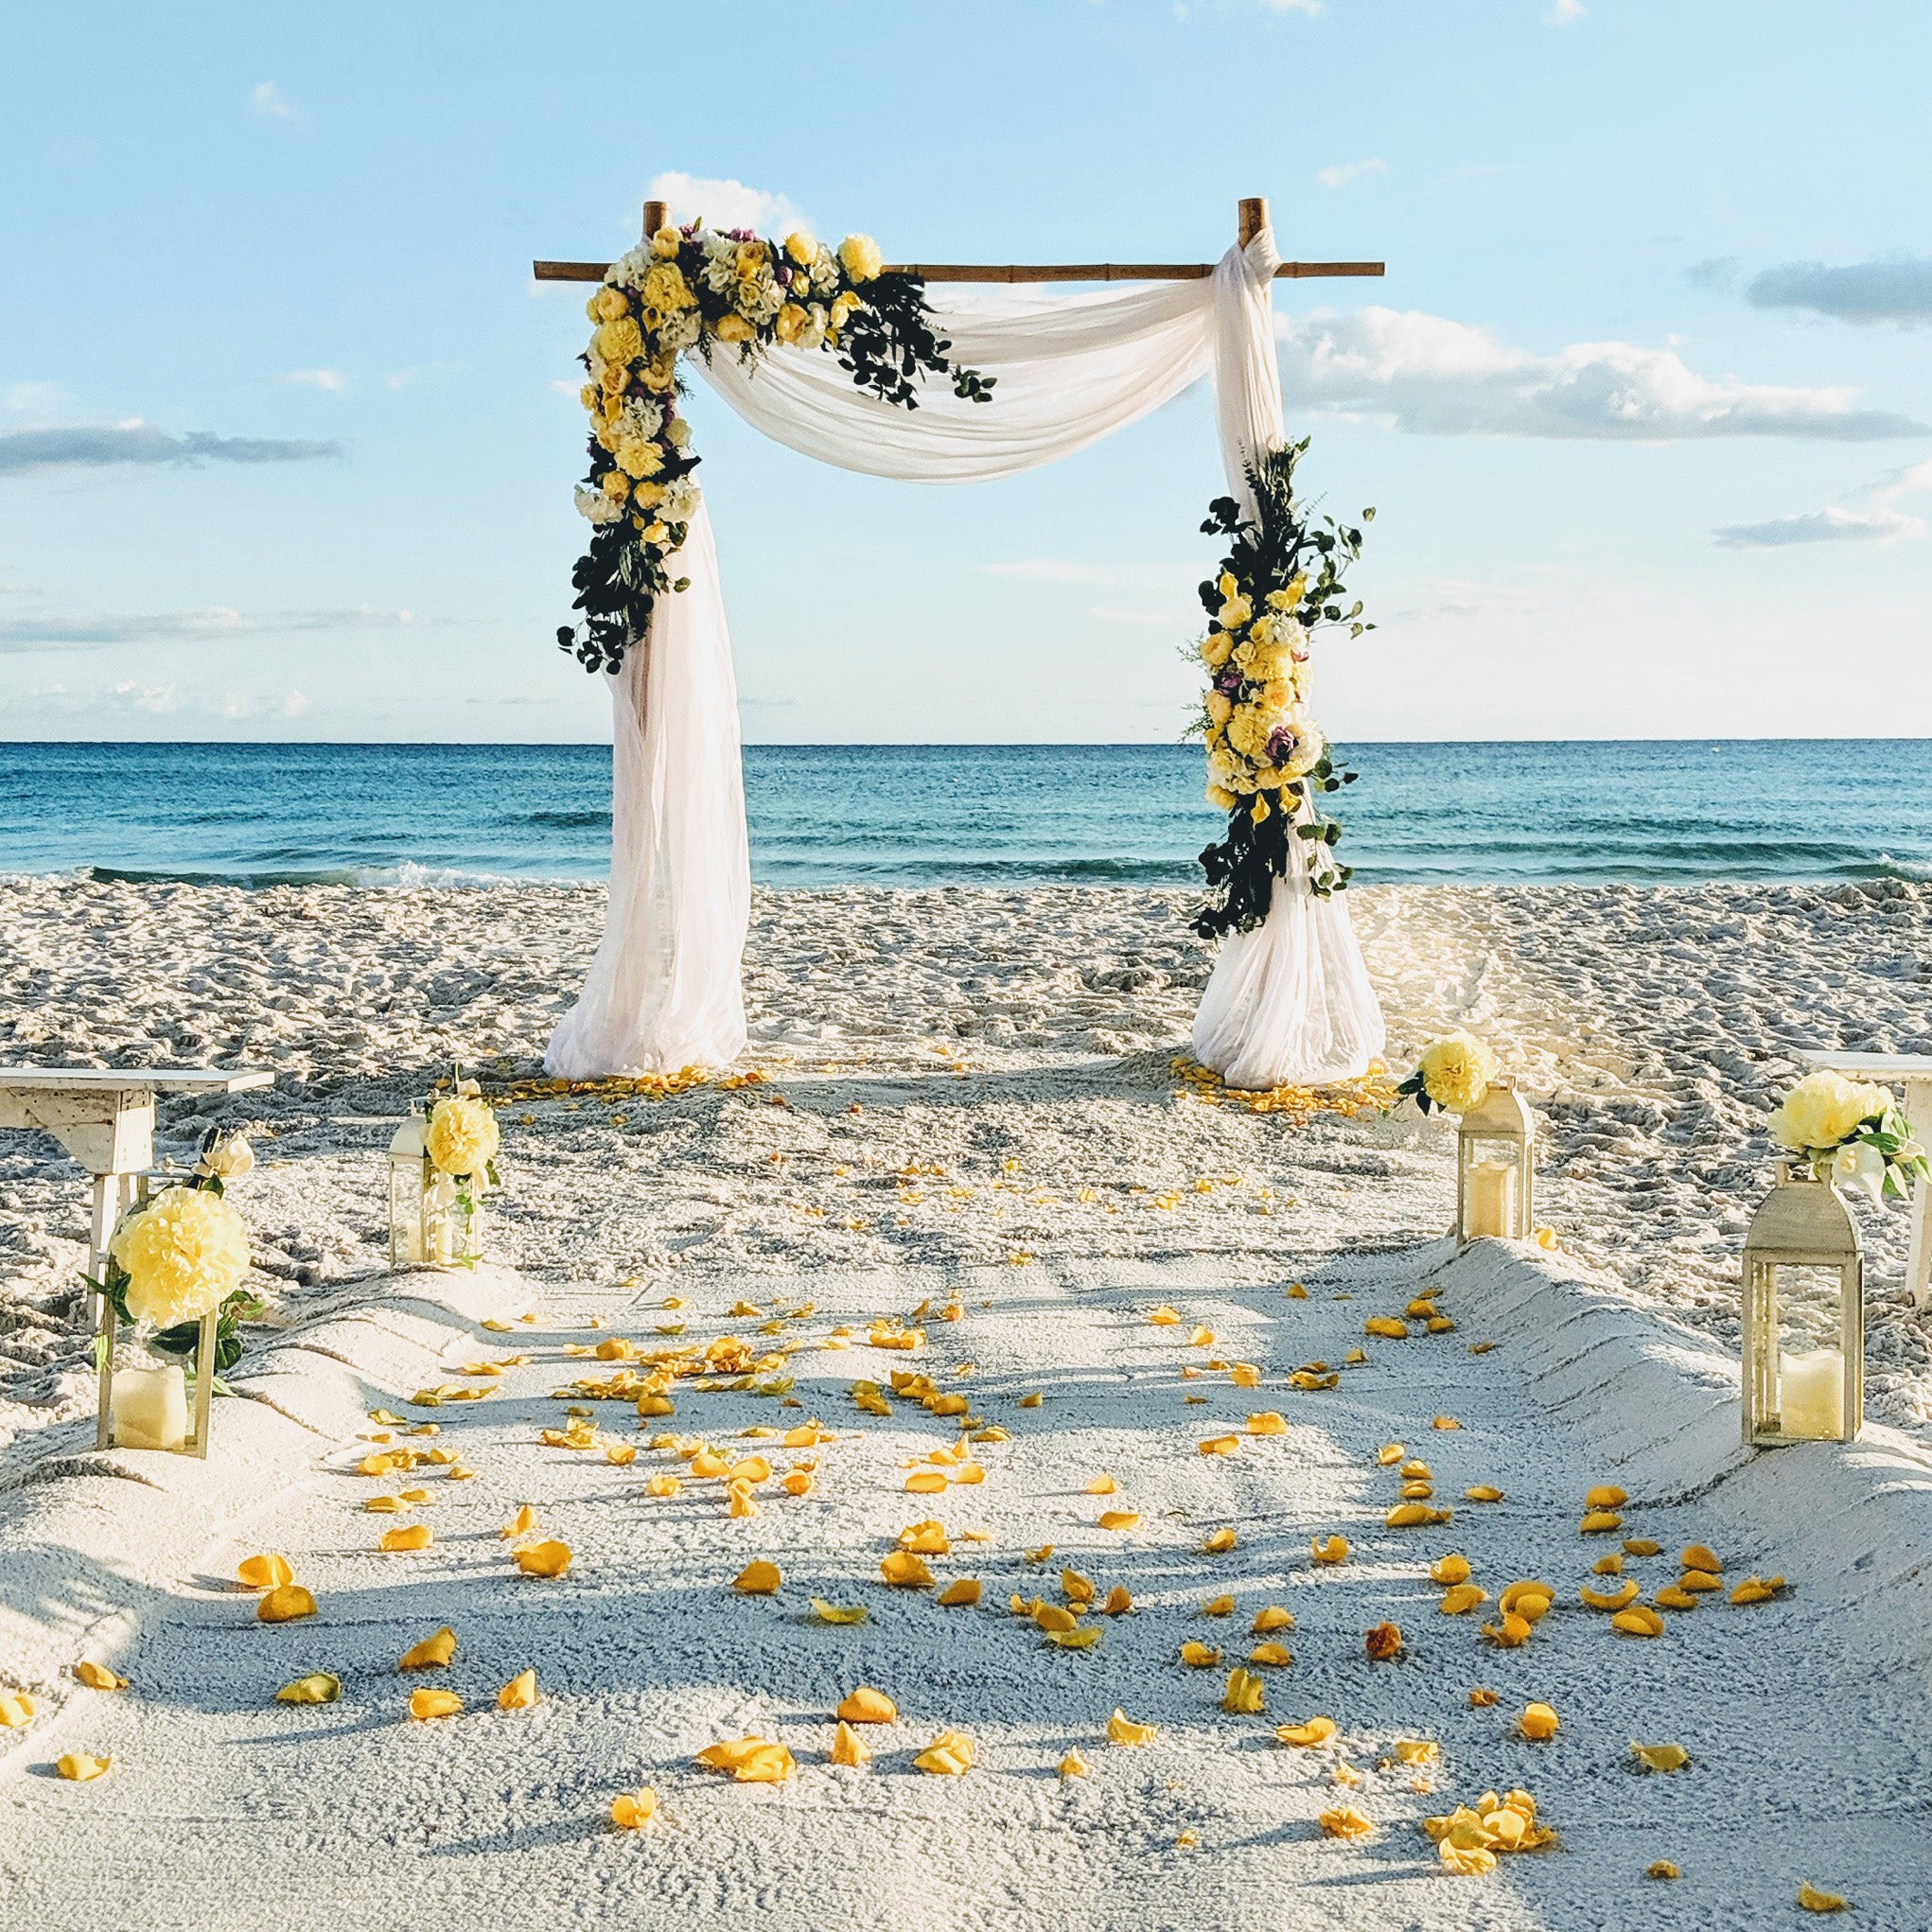 bamboo beach destination elopement wedding decor rental panama city beach yellow wedding florida wedding panama city beach wedding event rentals